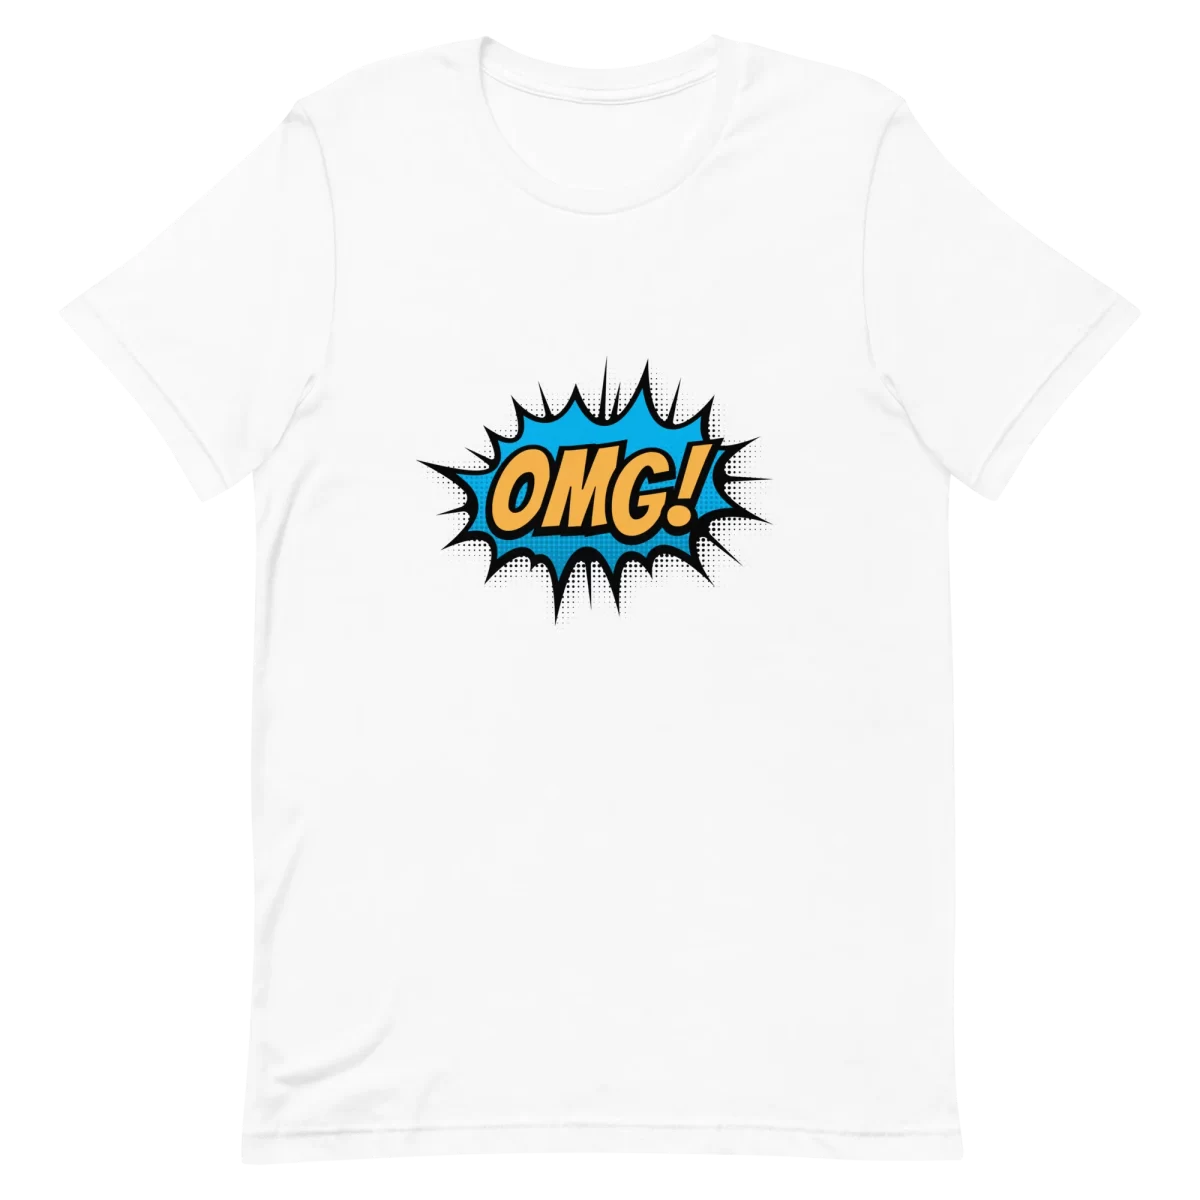 Unisex T-Shirt - OMG! - White